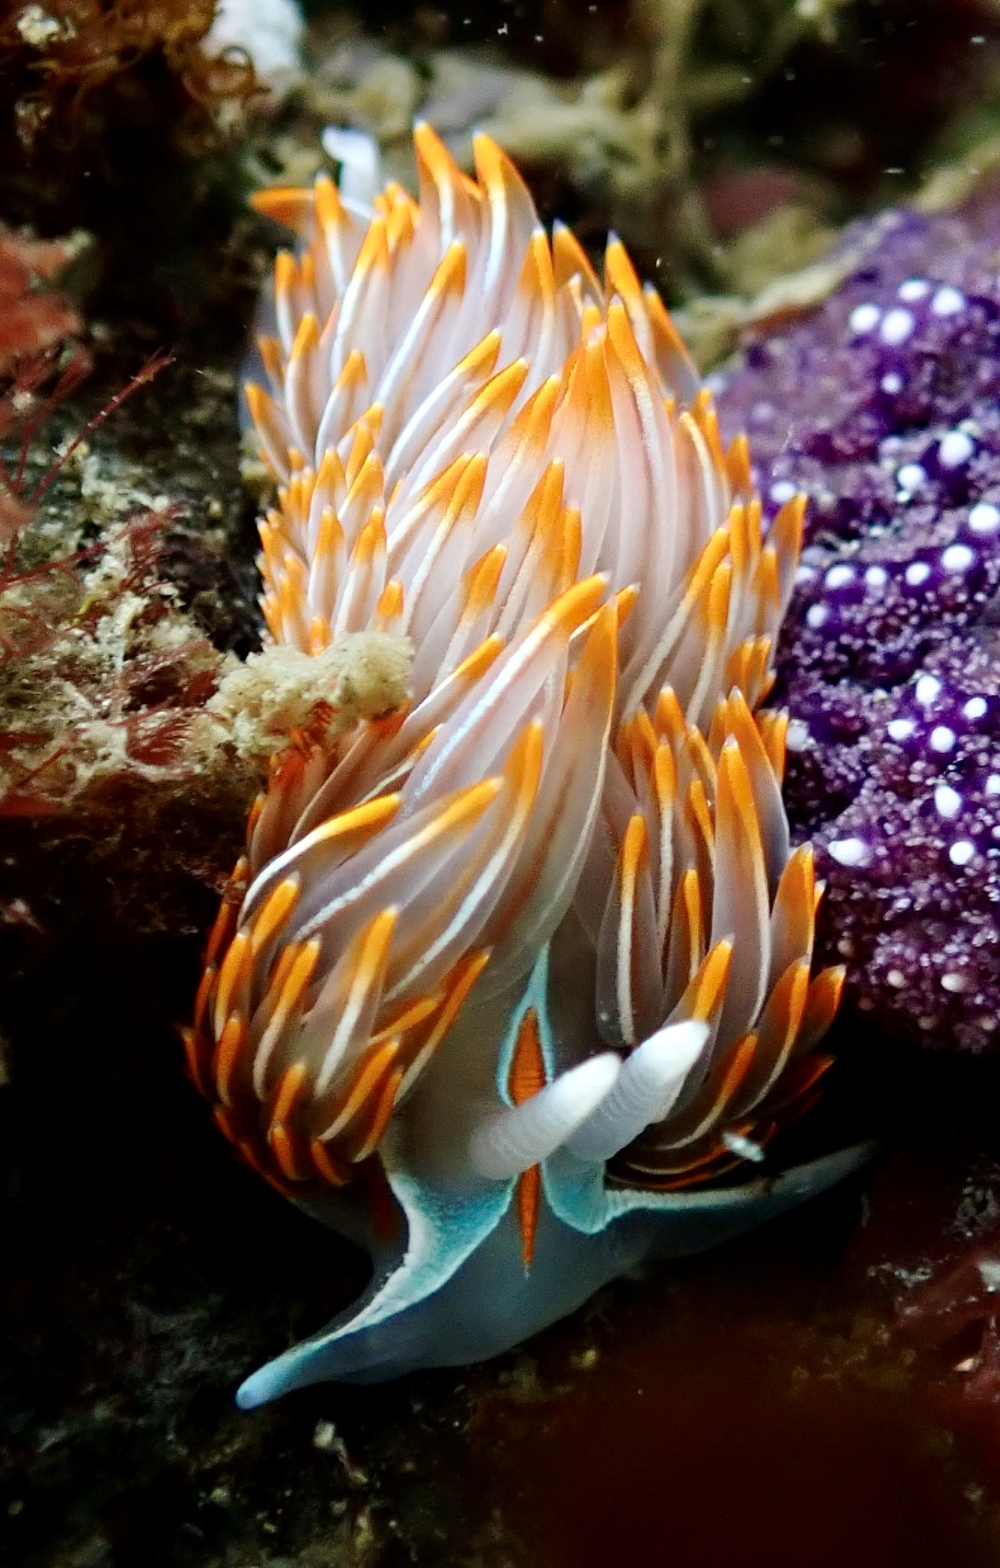 An underwater slug's orange tendrils sway with the current.